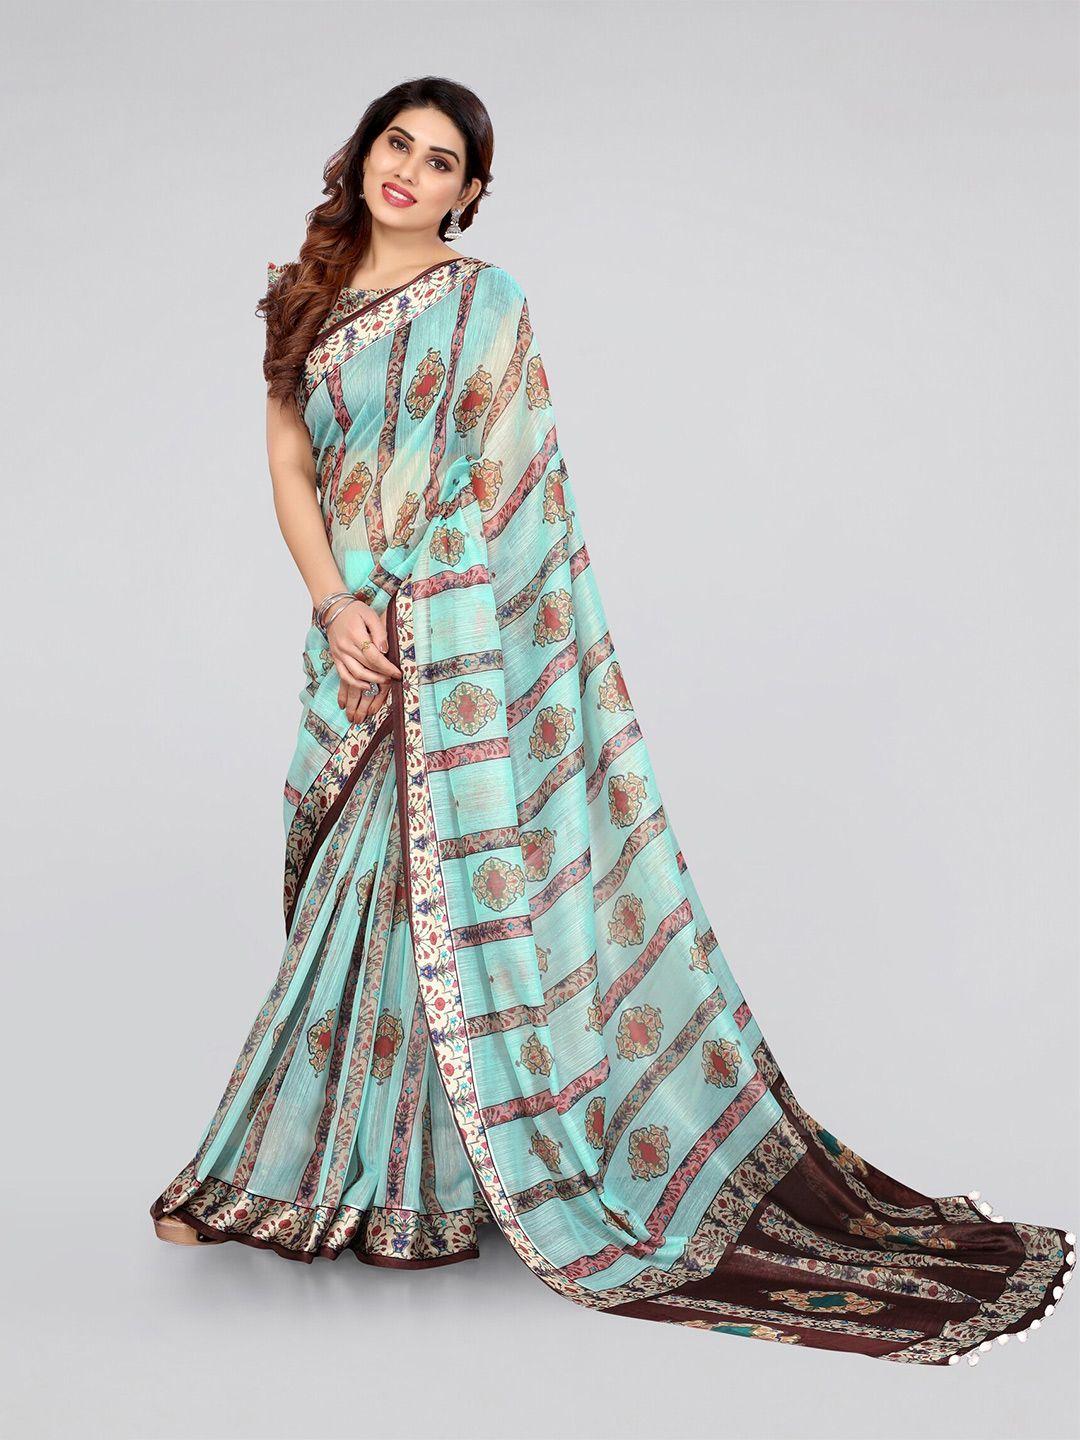 mirchi fashion turquoise blue & brown floral printed saree